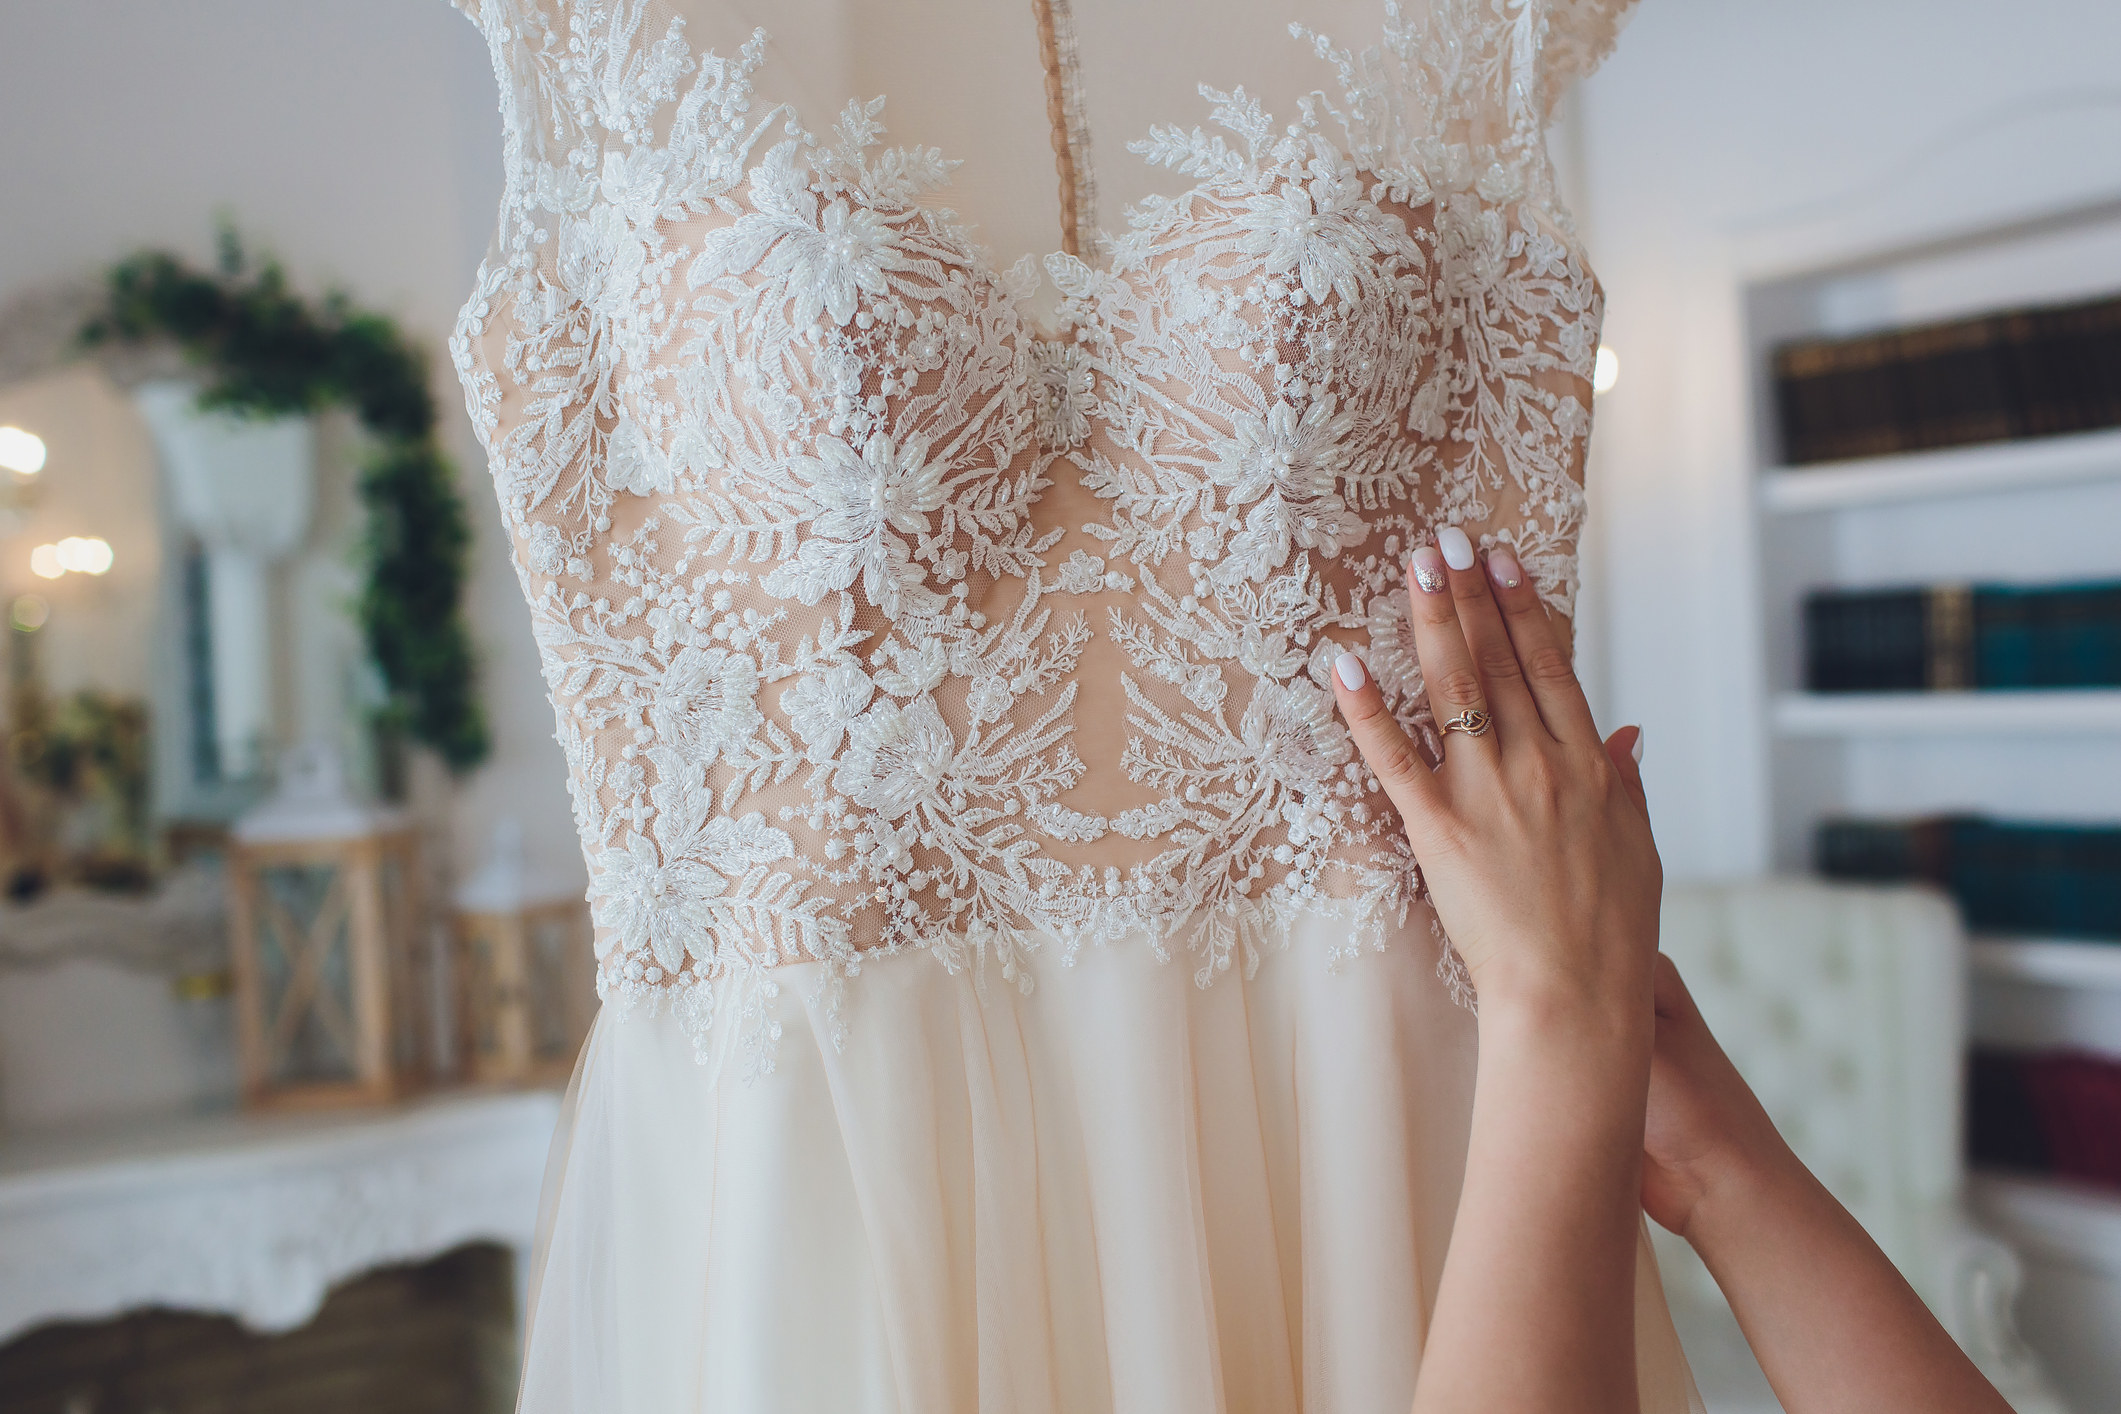 Hands touch a wedding dress hanging